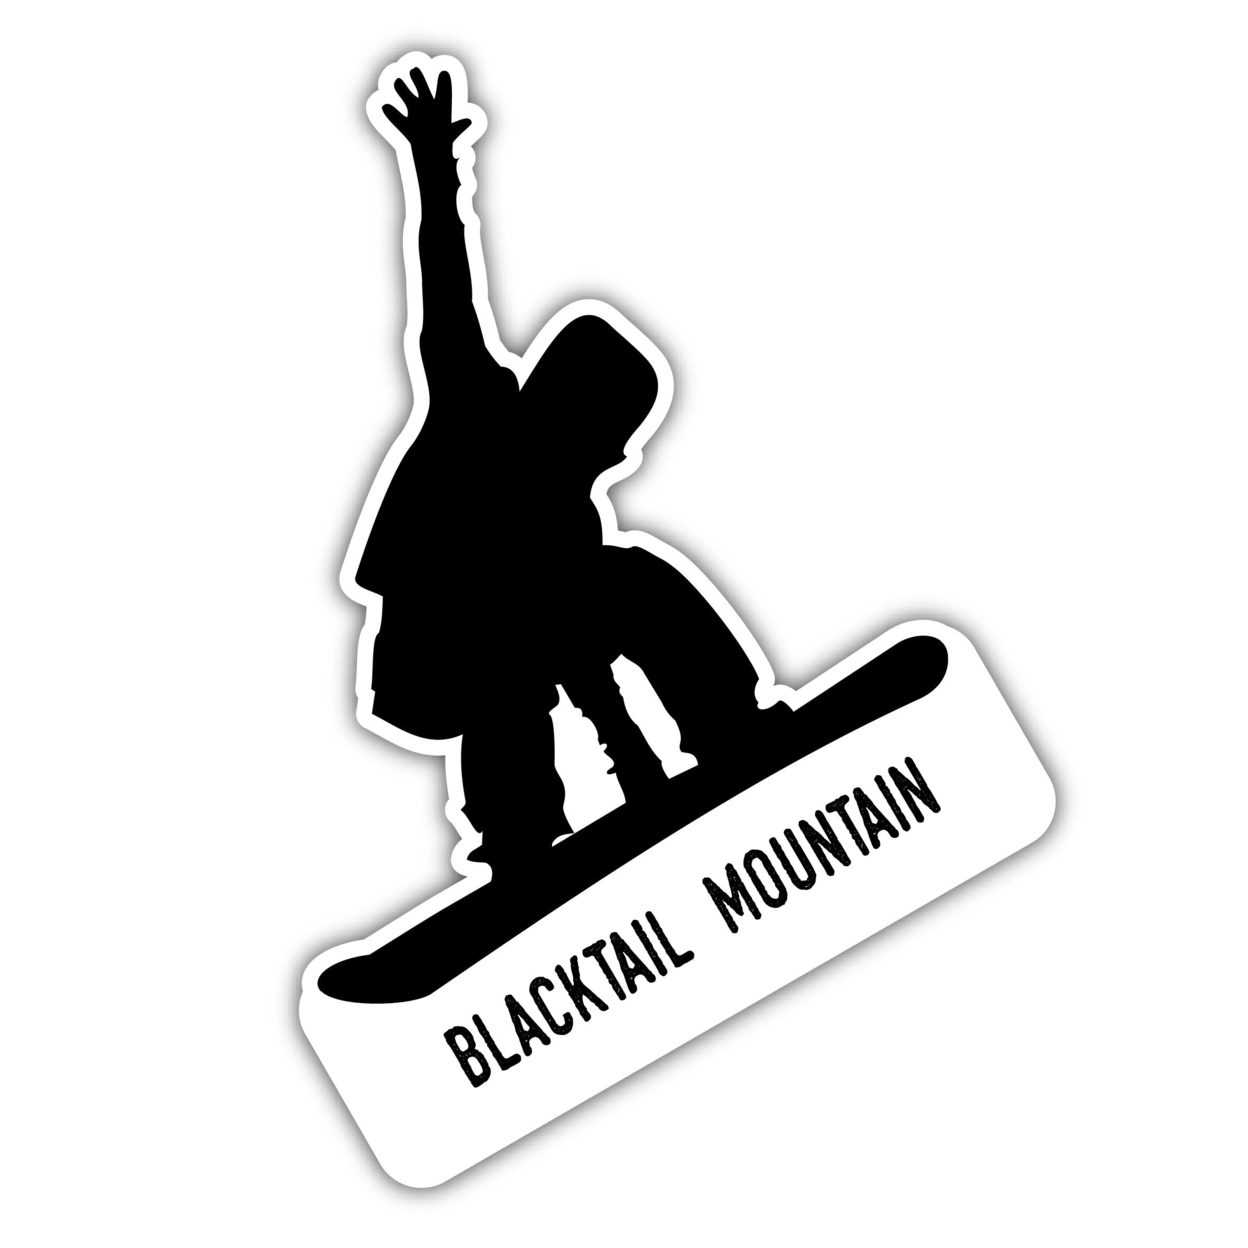 Blacktail Mountain Montana Ski Adventures Souvenir Approximately 5 X 2.5-Inch Vinyl Decal Sticker Goggle Design